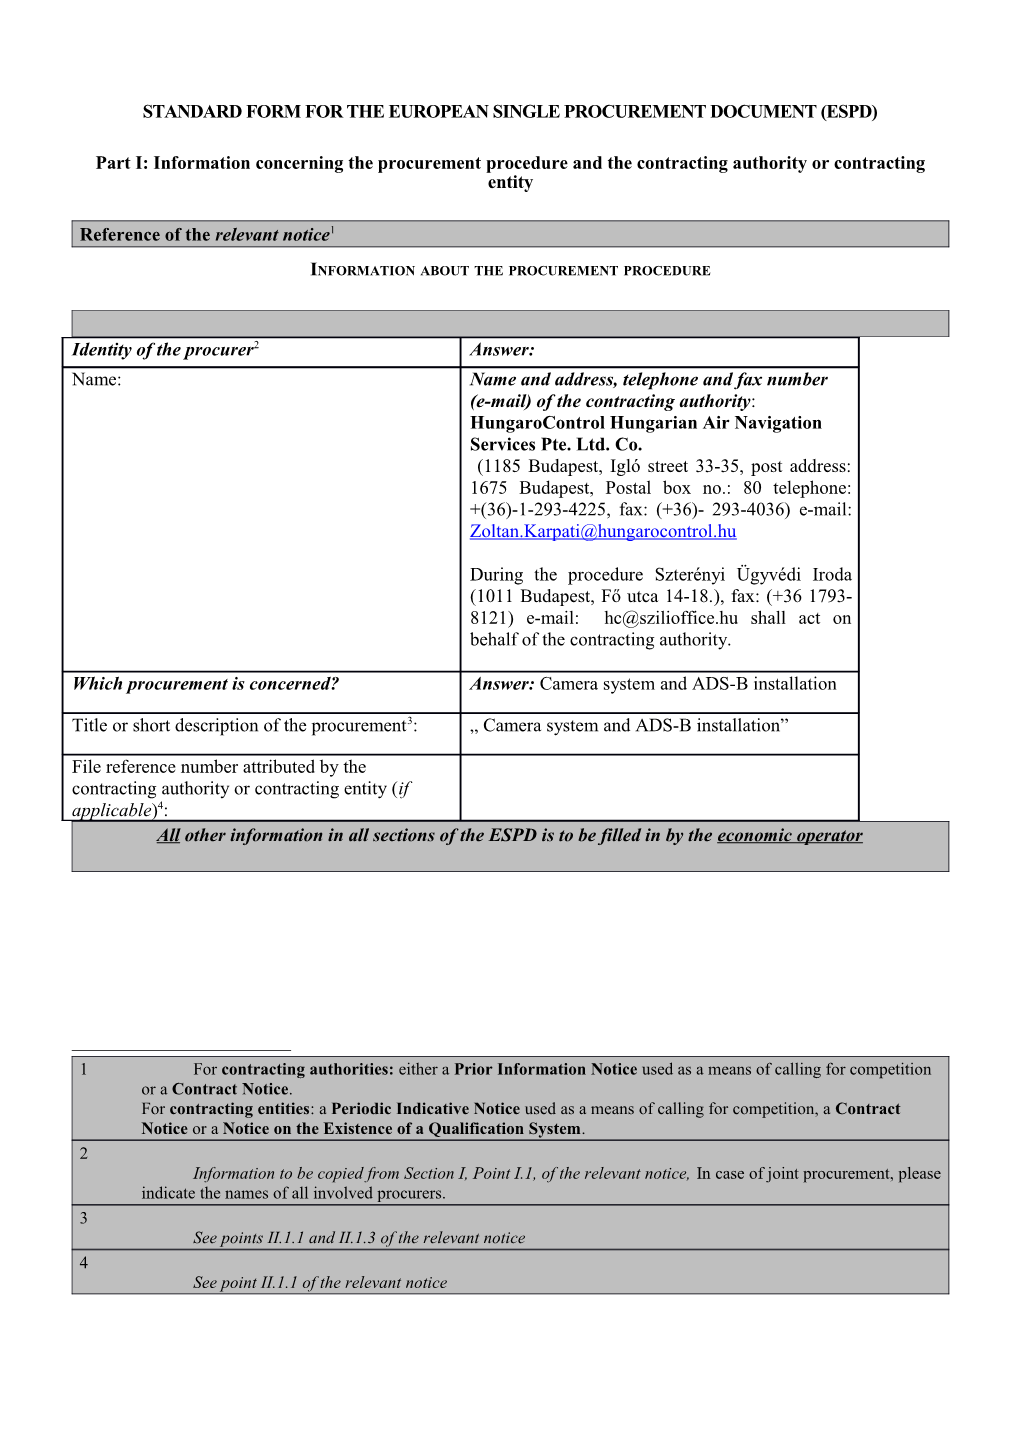 Standard Form for the European Single Procurement Document (Espd)